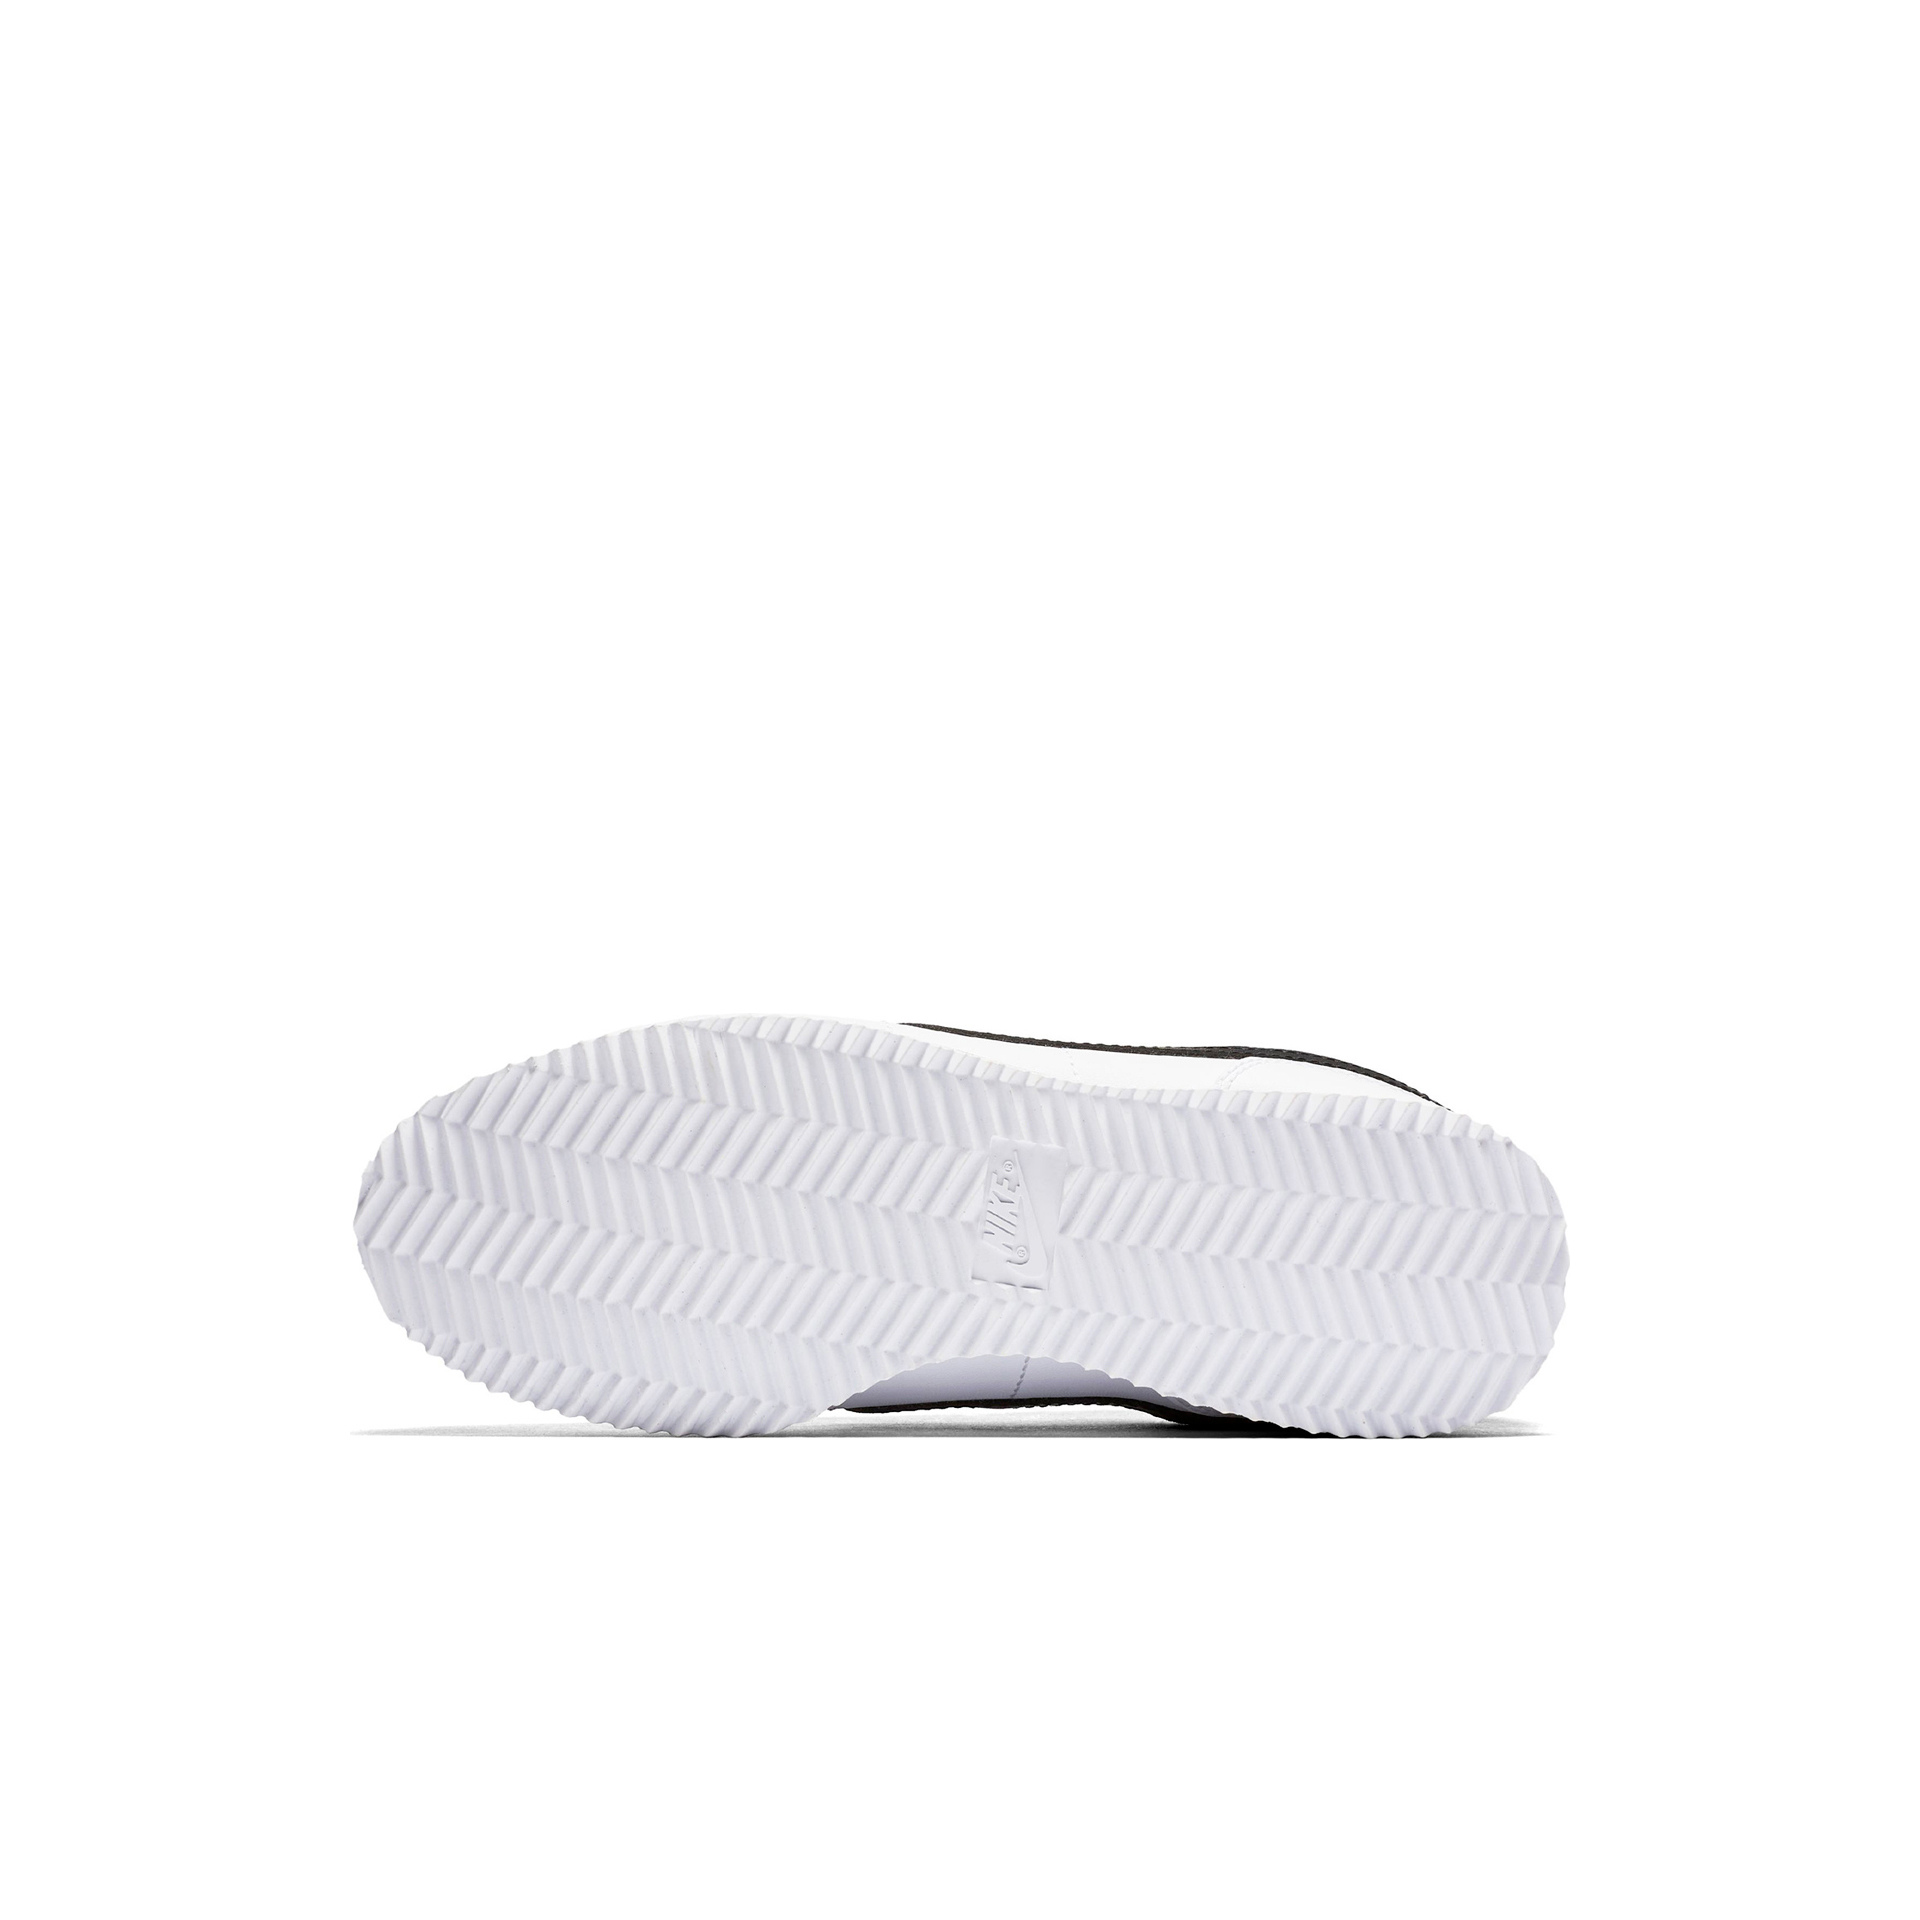 Corrección Velo consumidor Nike Cortez Basic Sl (gs) zapatillas niños/as tallas 28-38.5 | Dooers  Sneakers